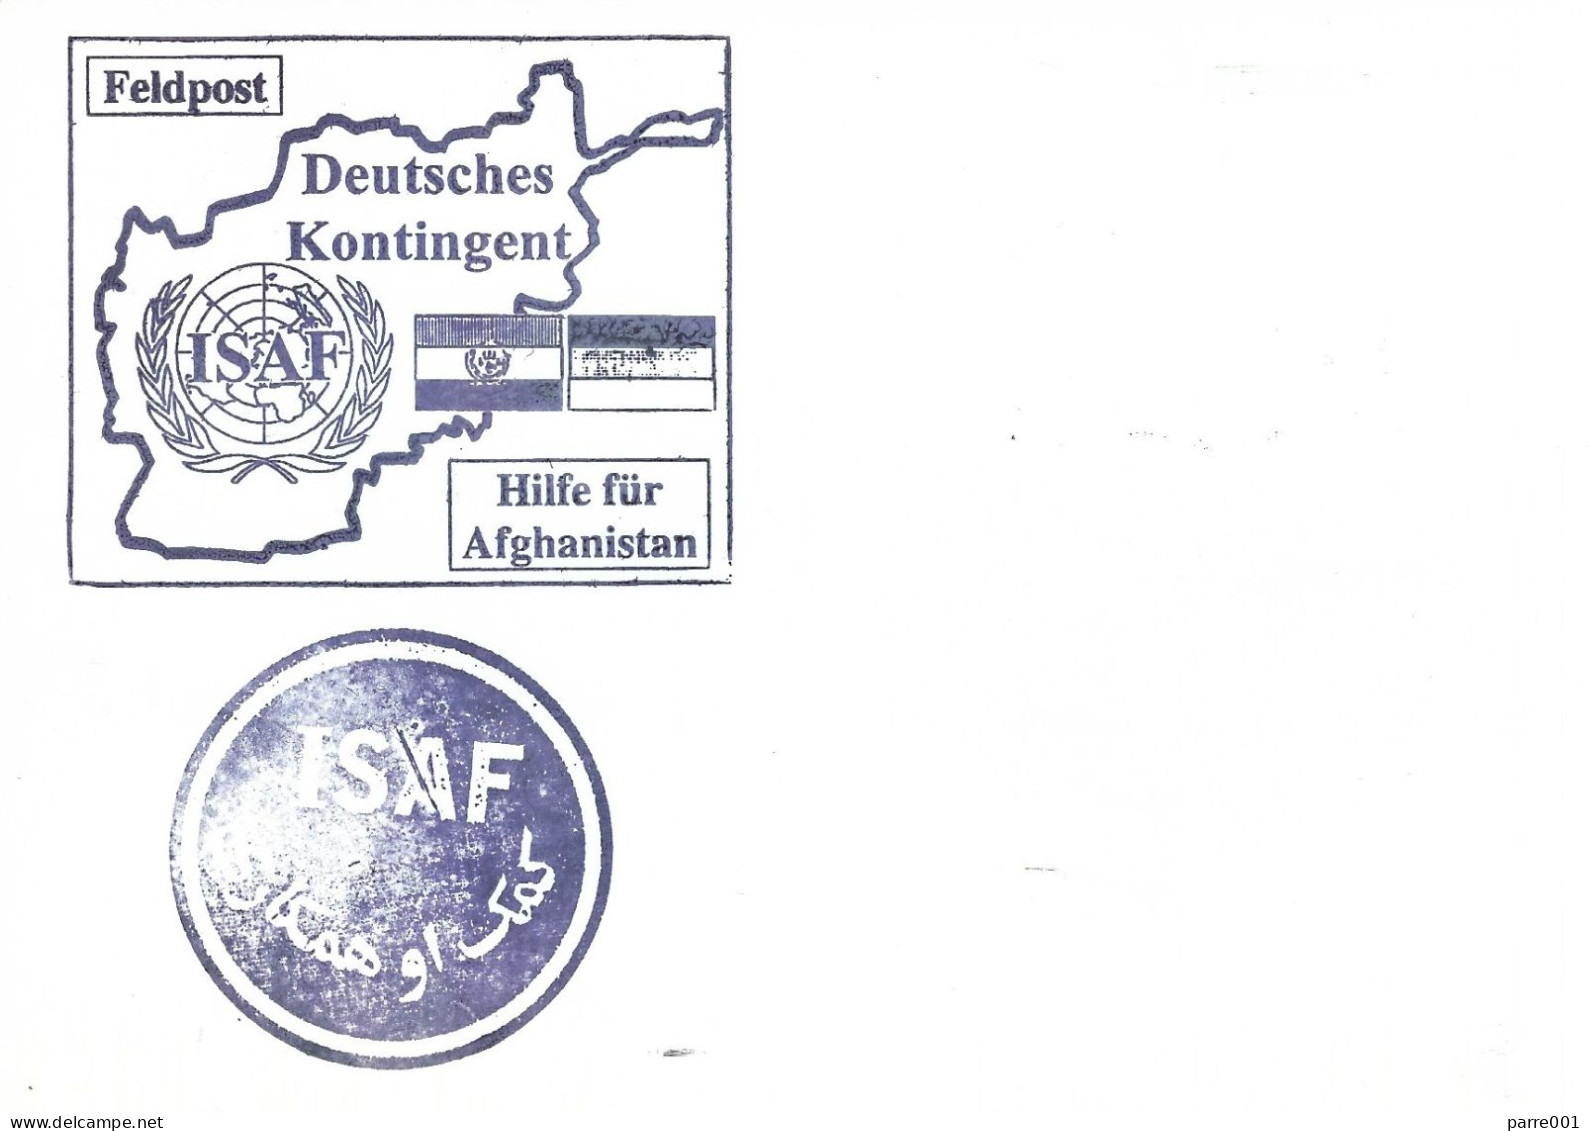 ISAF NATO 2002 Feldpost 1371 Kabul Afghanistan German FPO Feldpost Peacekeeping Military Postcard - Militaria